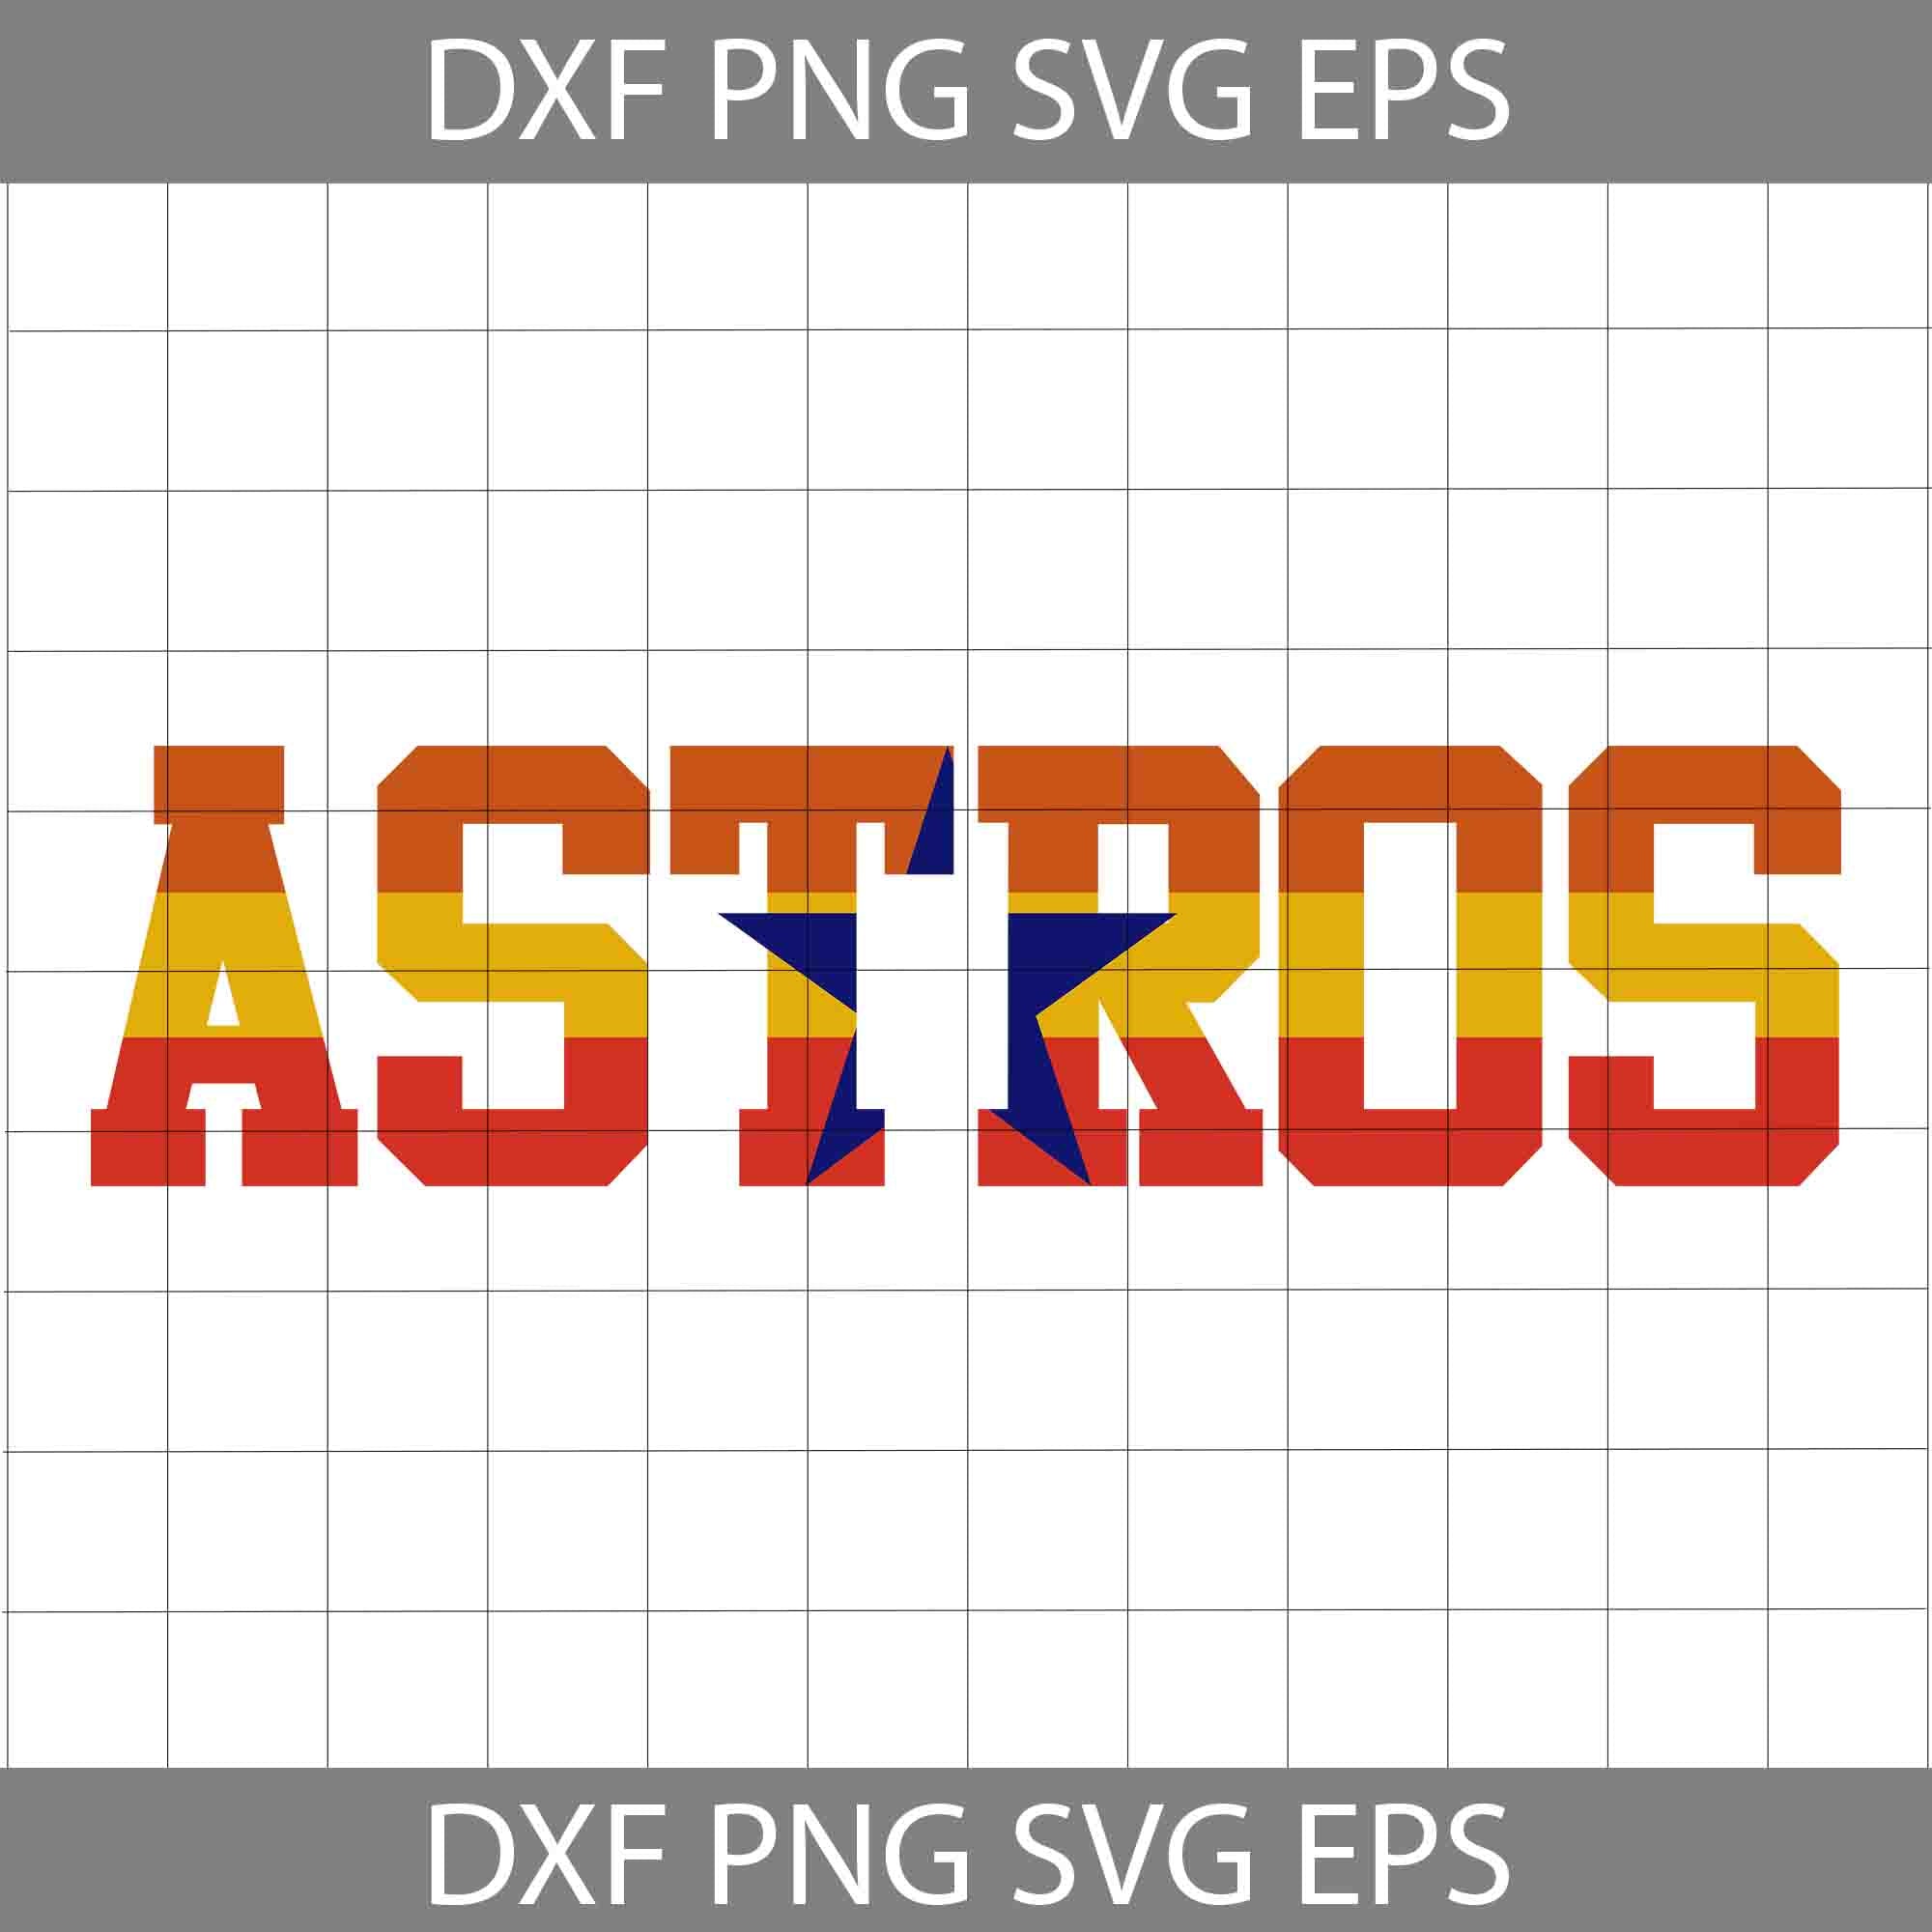 Houston Astros SVG PNG Cricut Silhouette